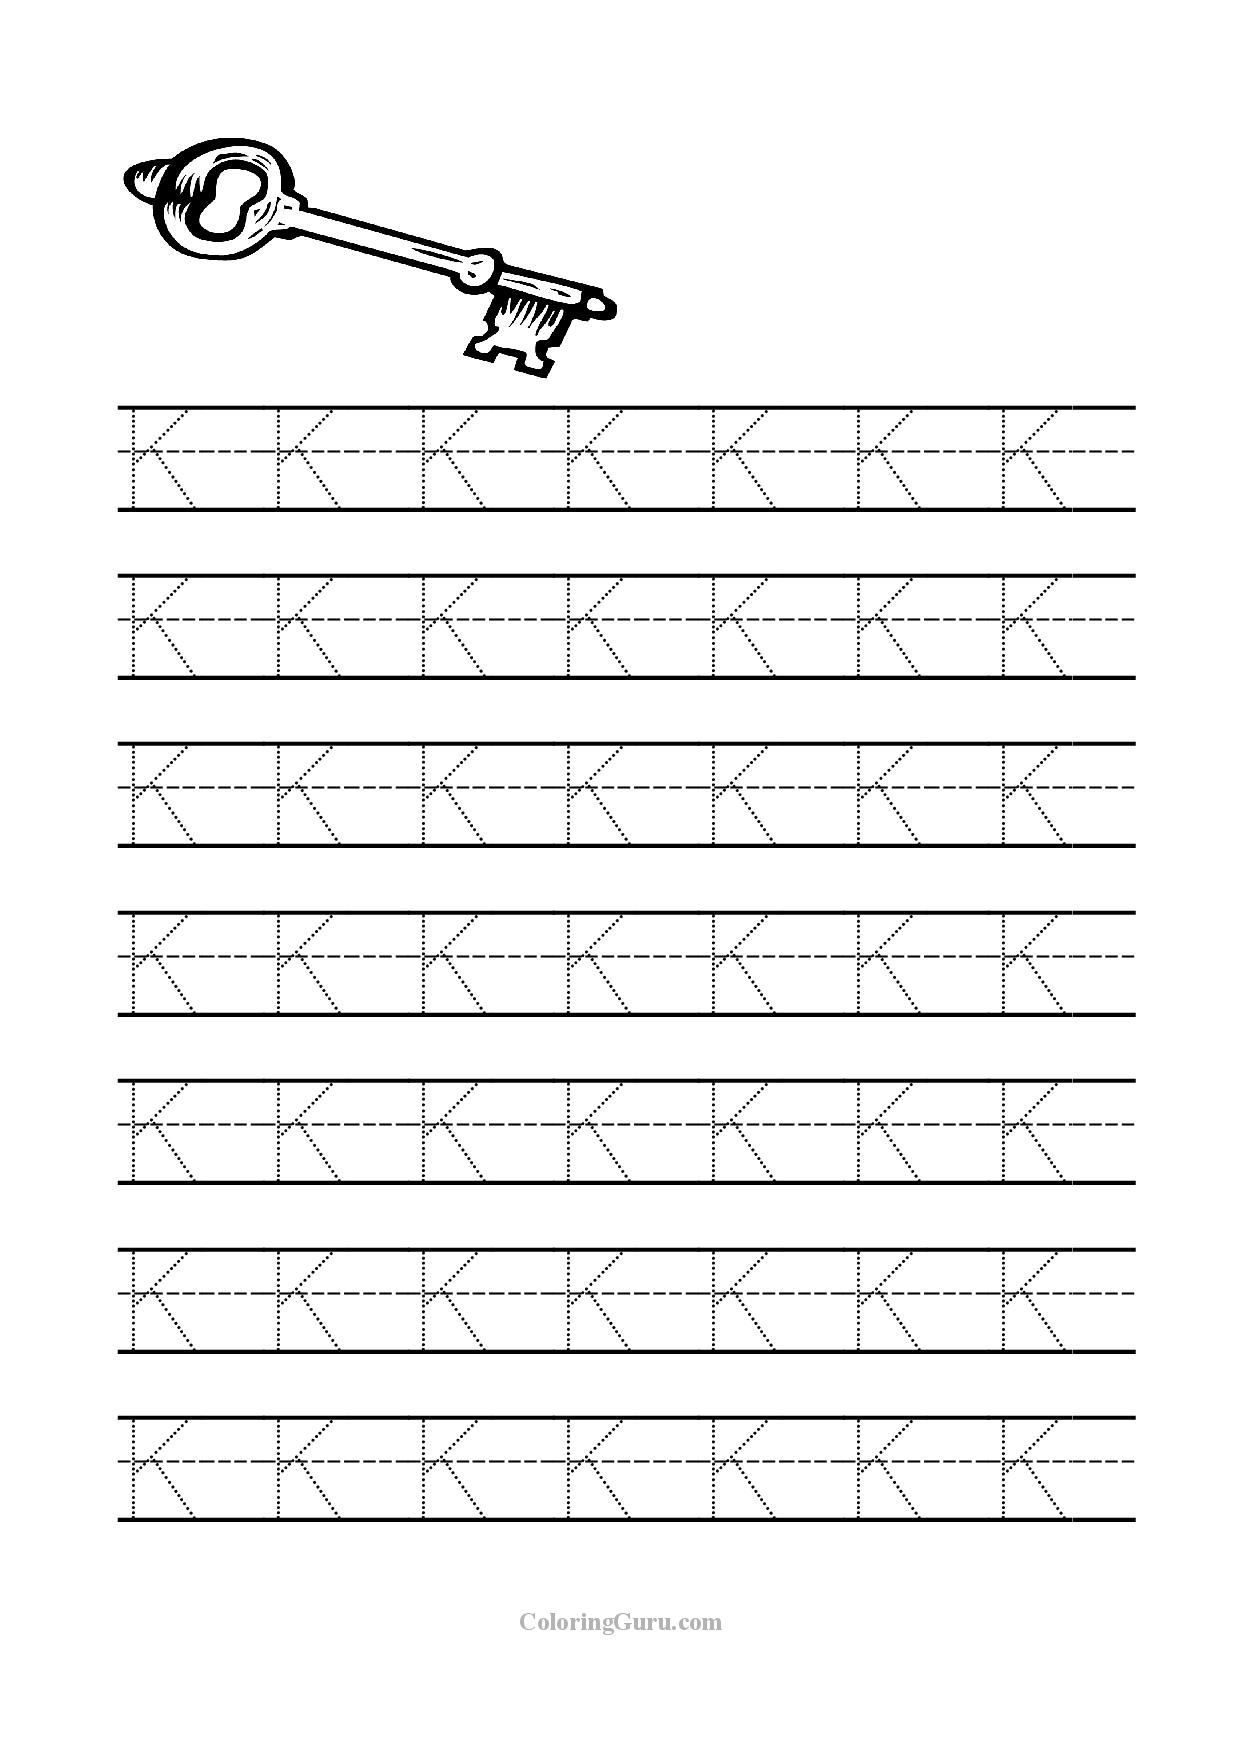 Free Printable Tracing Letter K Worksheets For Preschool | Kids | Letter K Worksheets Printable